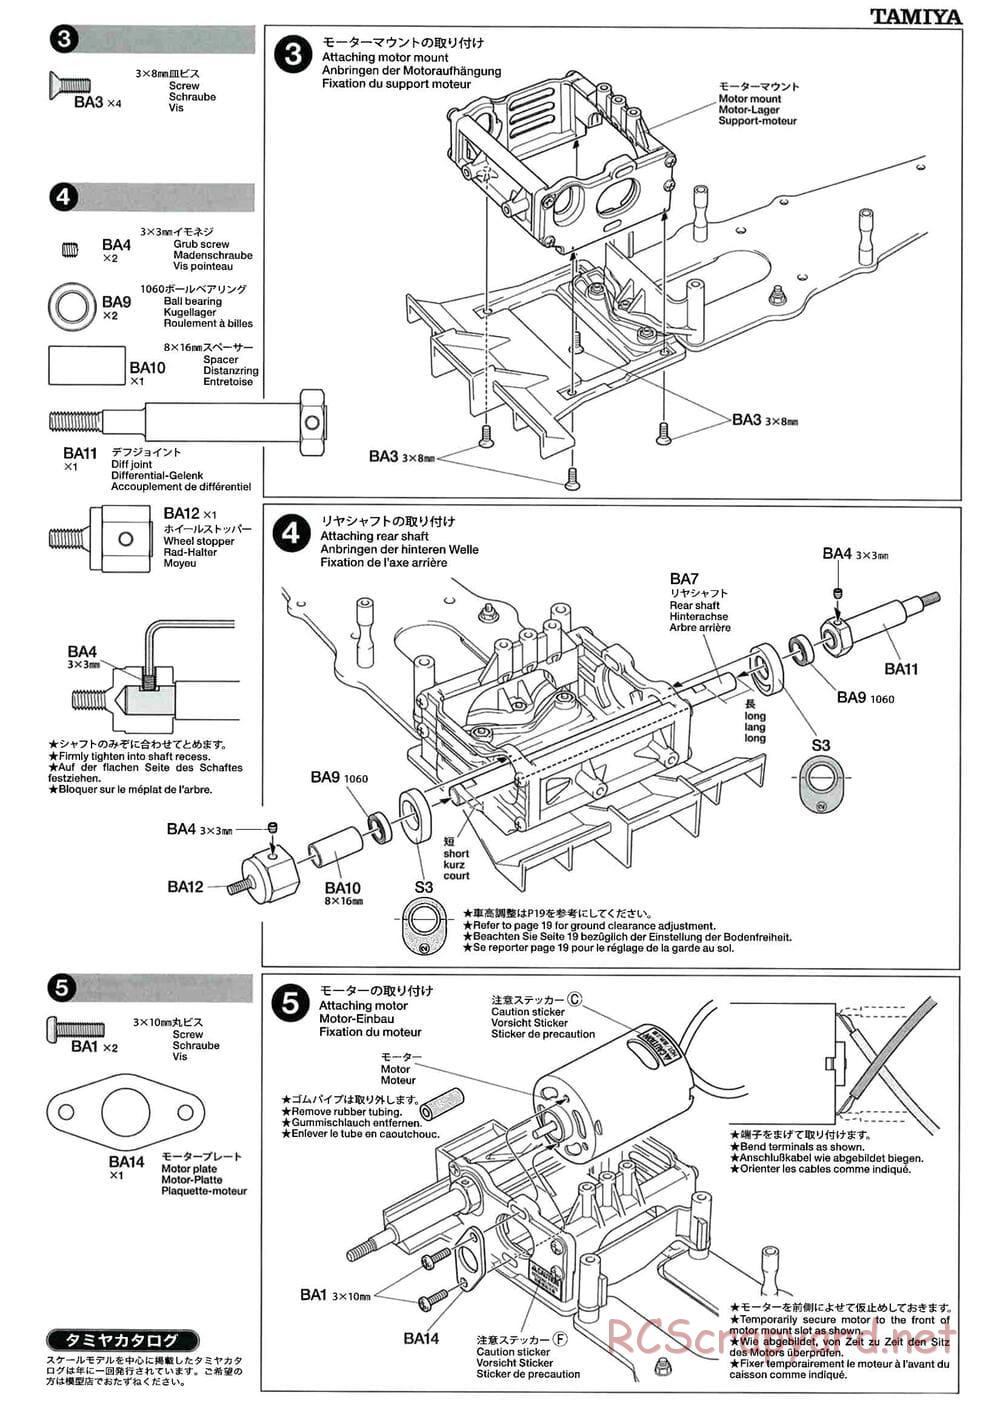 Tamiya - F104W Chassis - Manual - Page 5